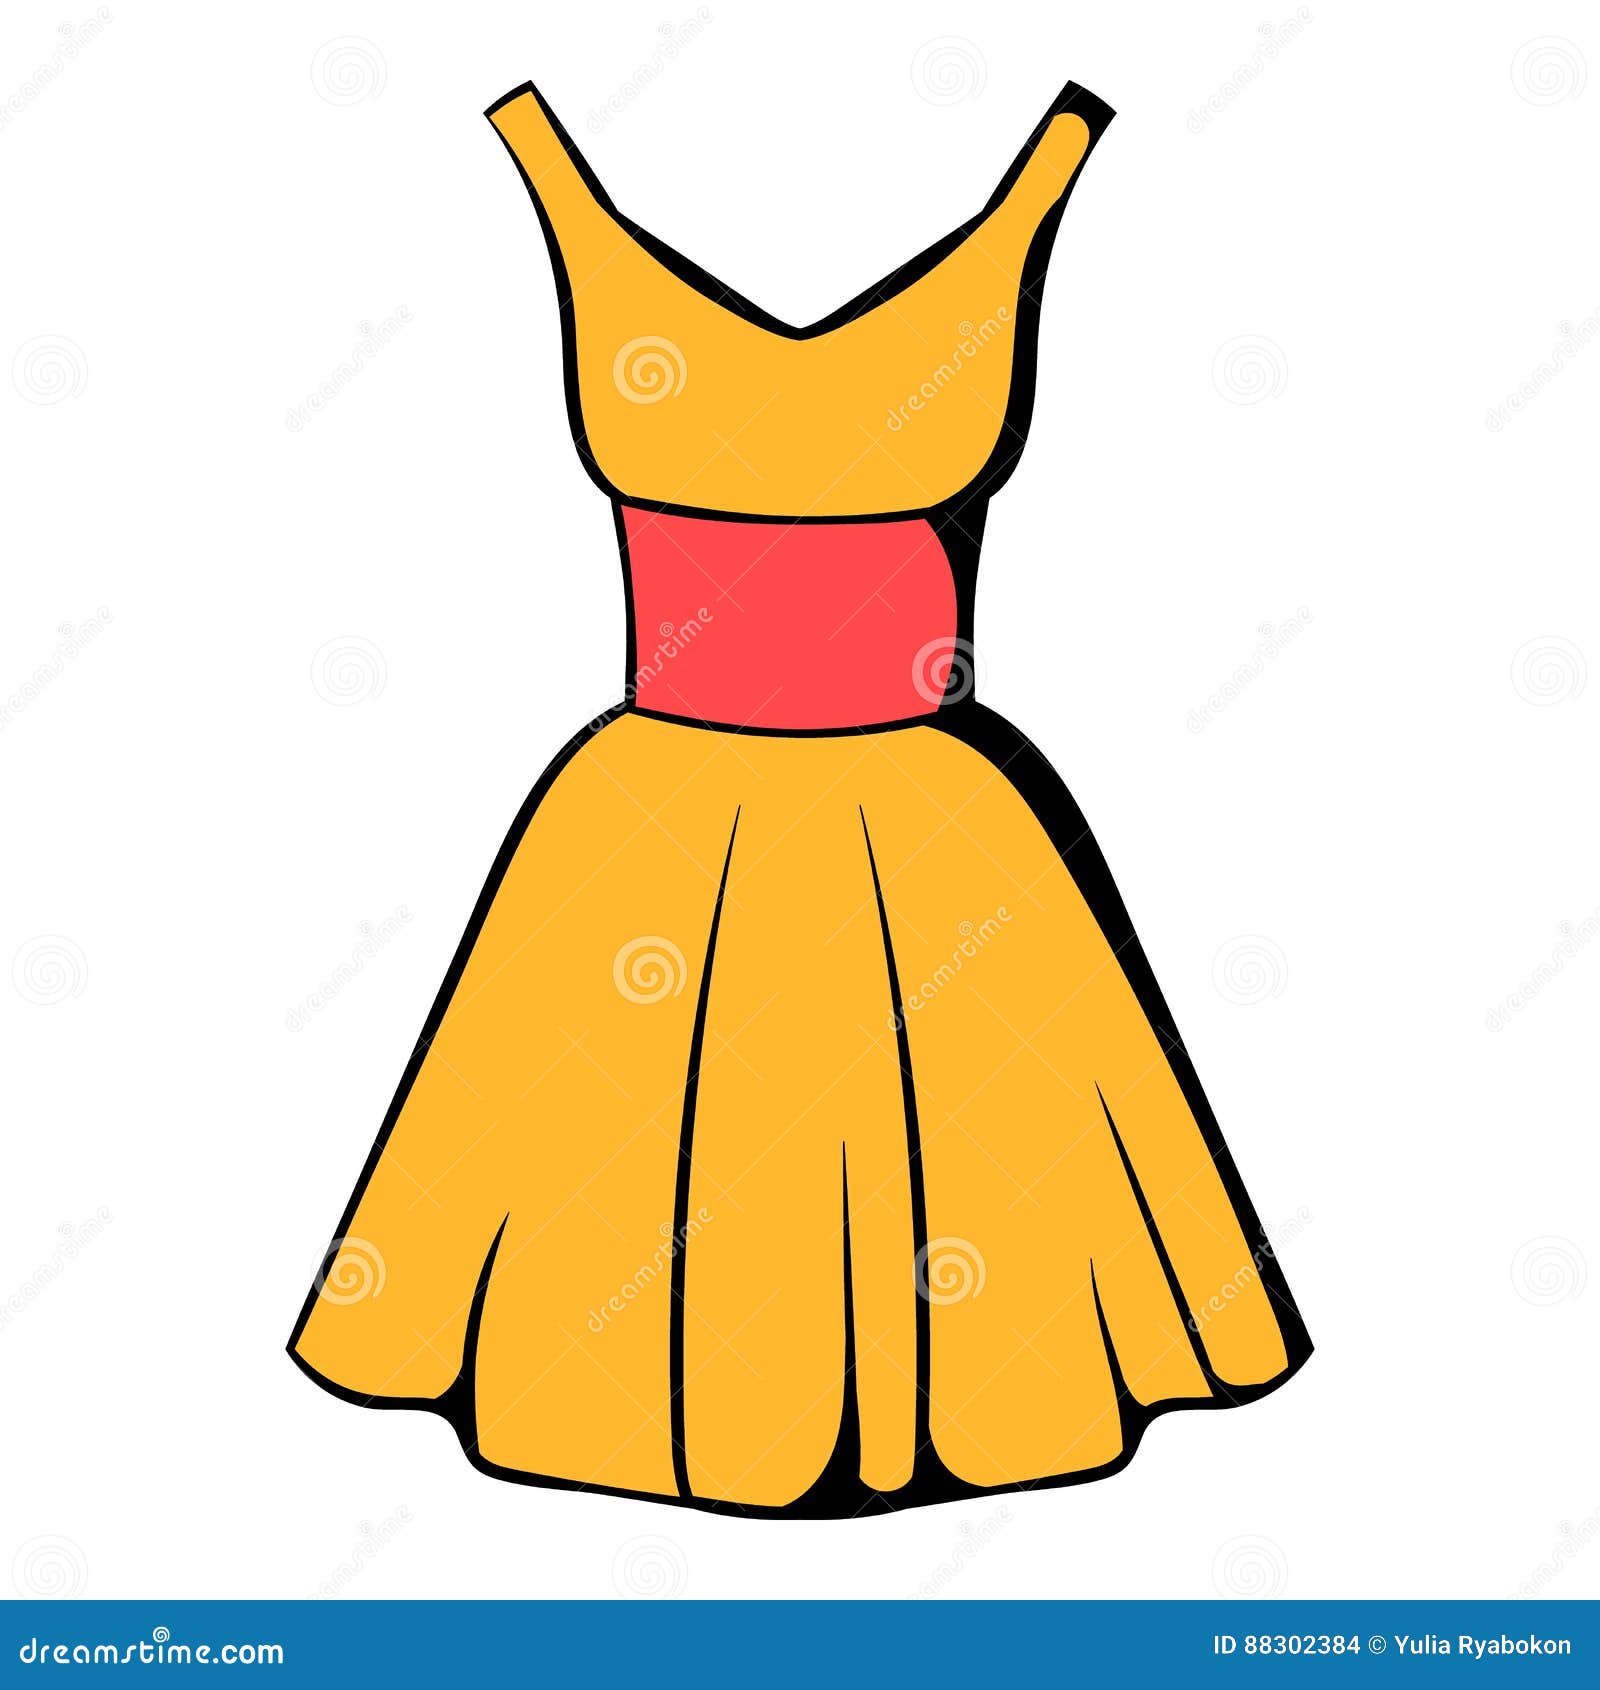 Dress icon, icon cartoon stock vector. Illustration of isolated - 88302384